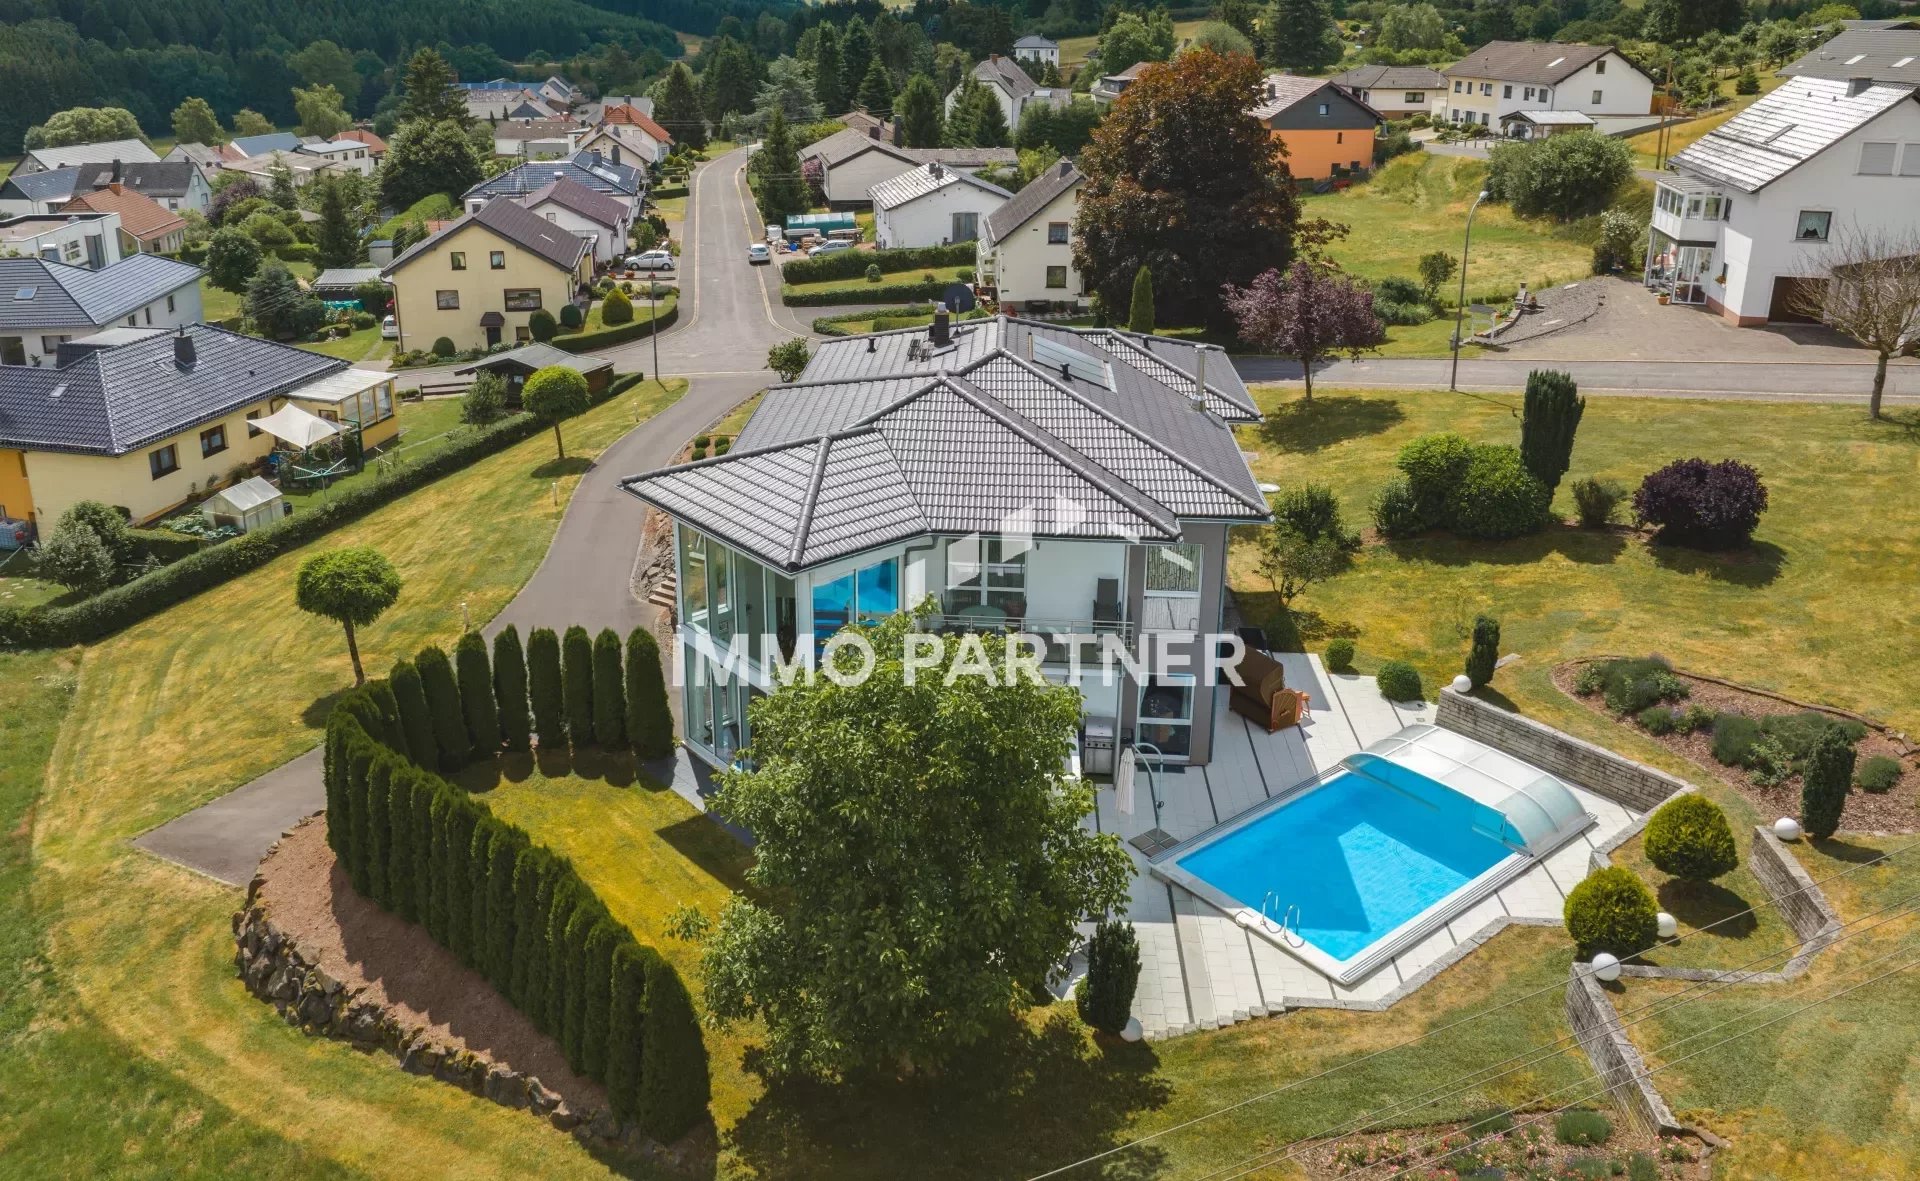 Exceptional villa with swimming pool in a prime location (DE)